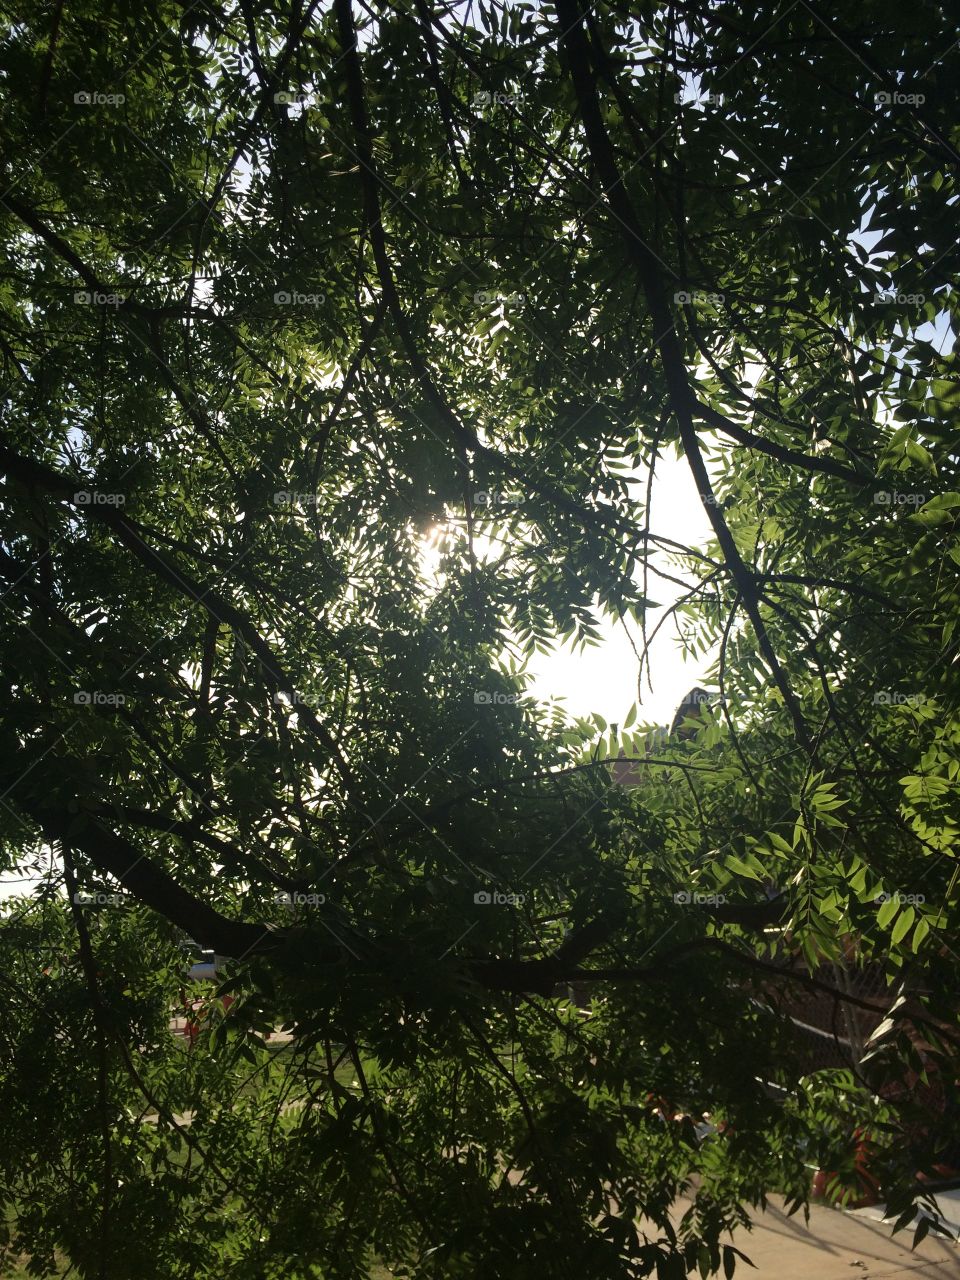 Sunshine through a tree canopy